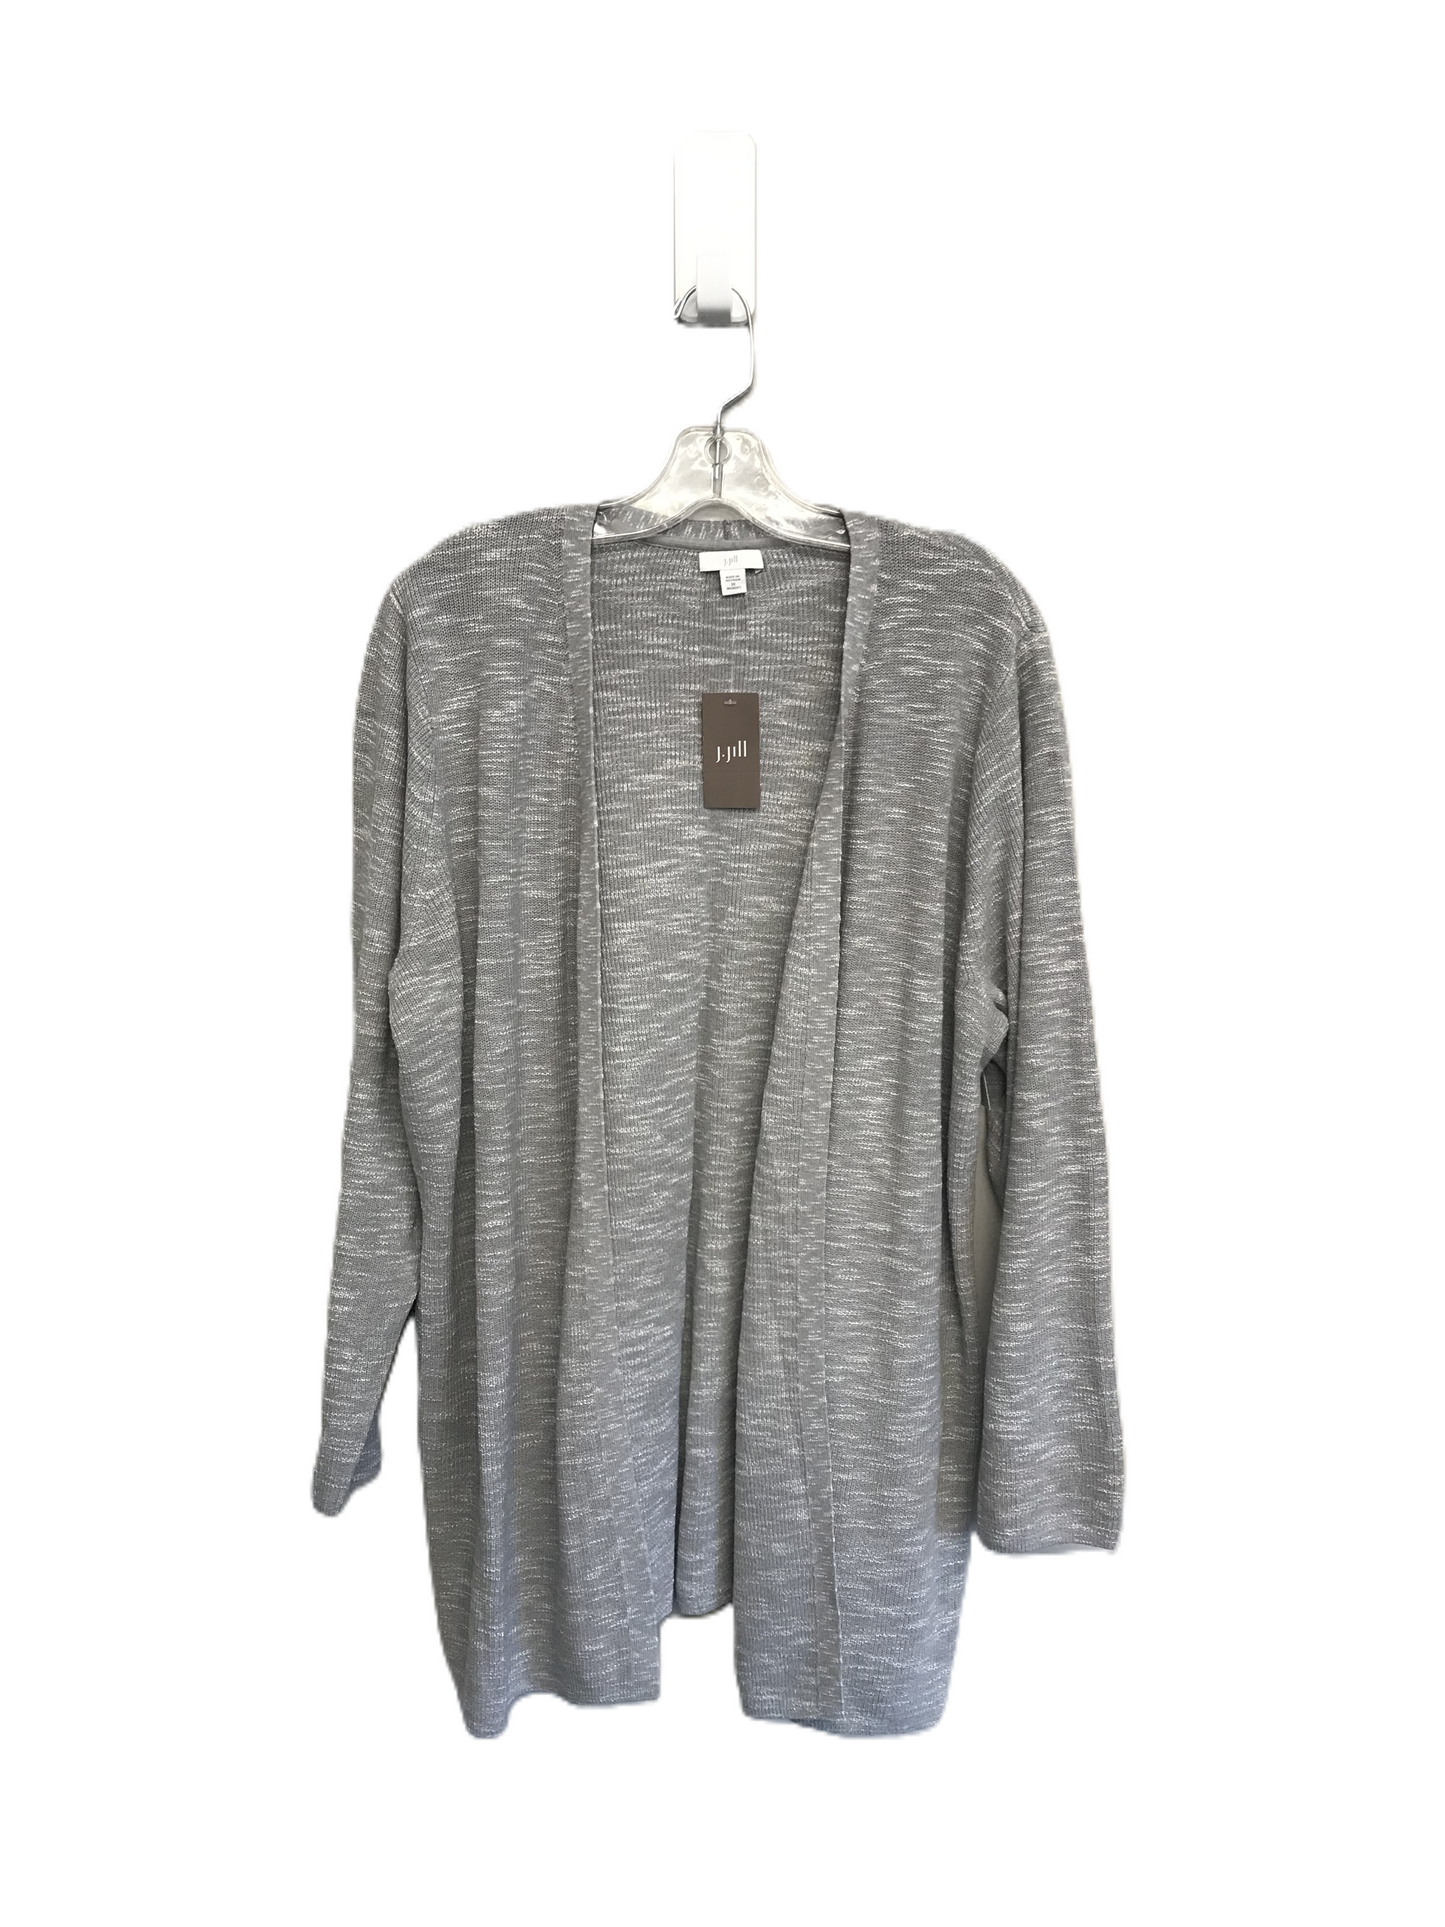 Grey Sweater Cardigan By J. Jill, Size: 2x